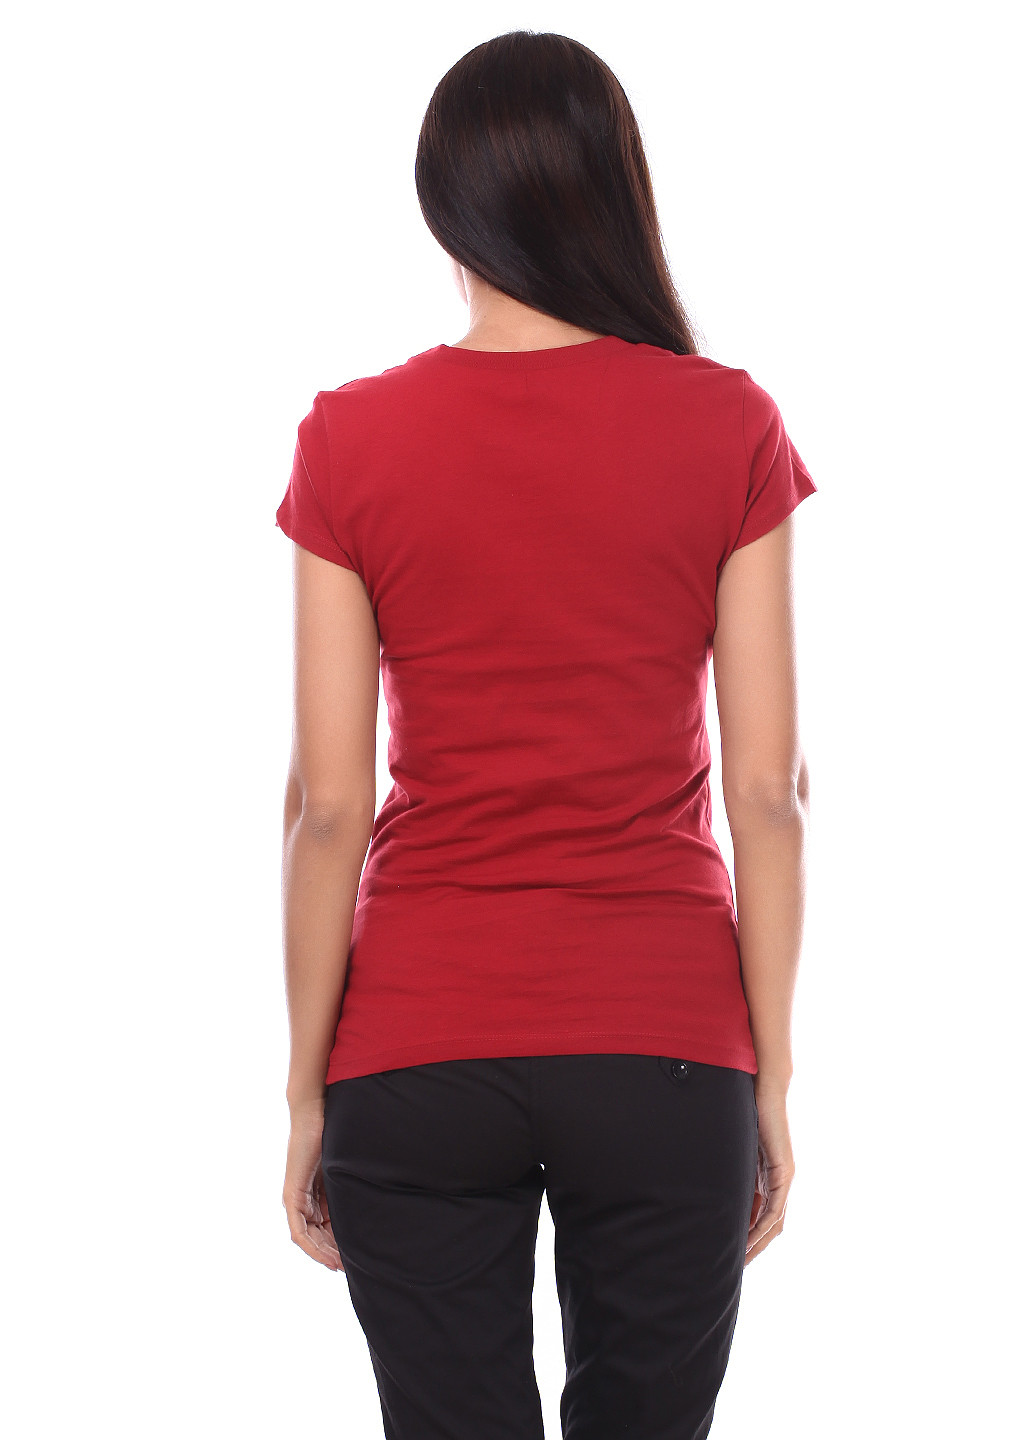 Красная летняя футболка Aeropostale